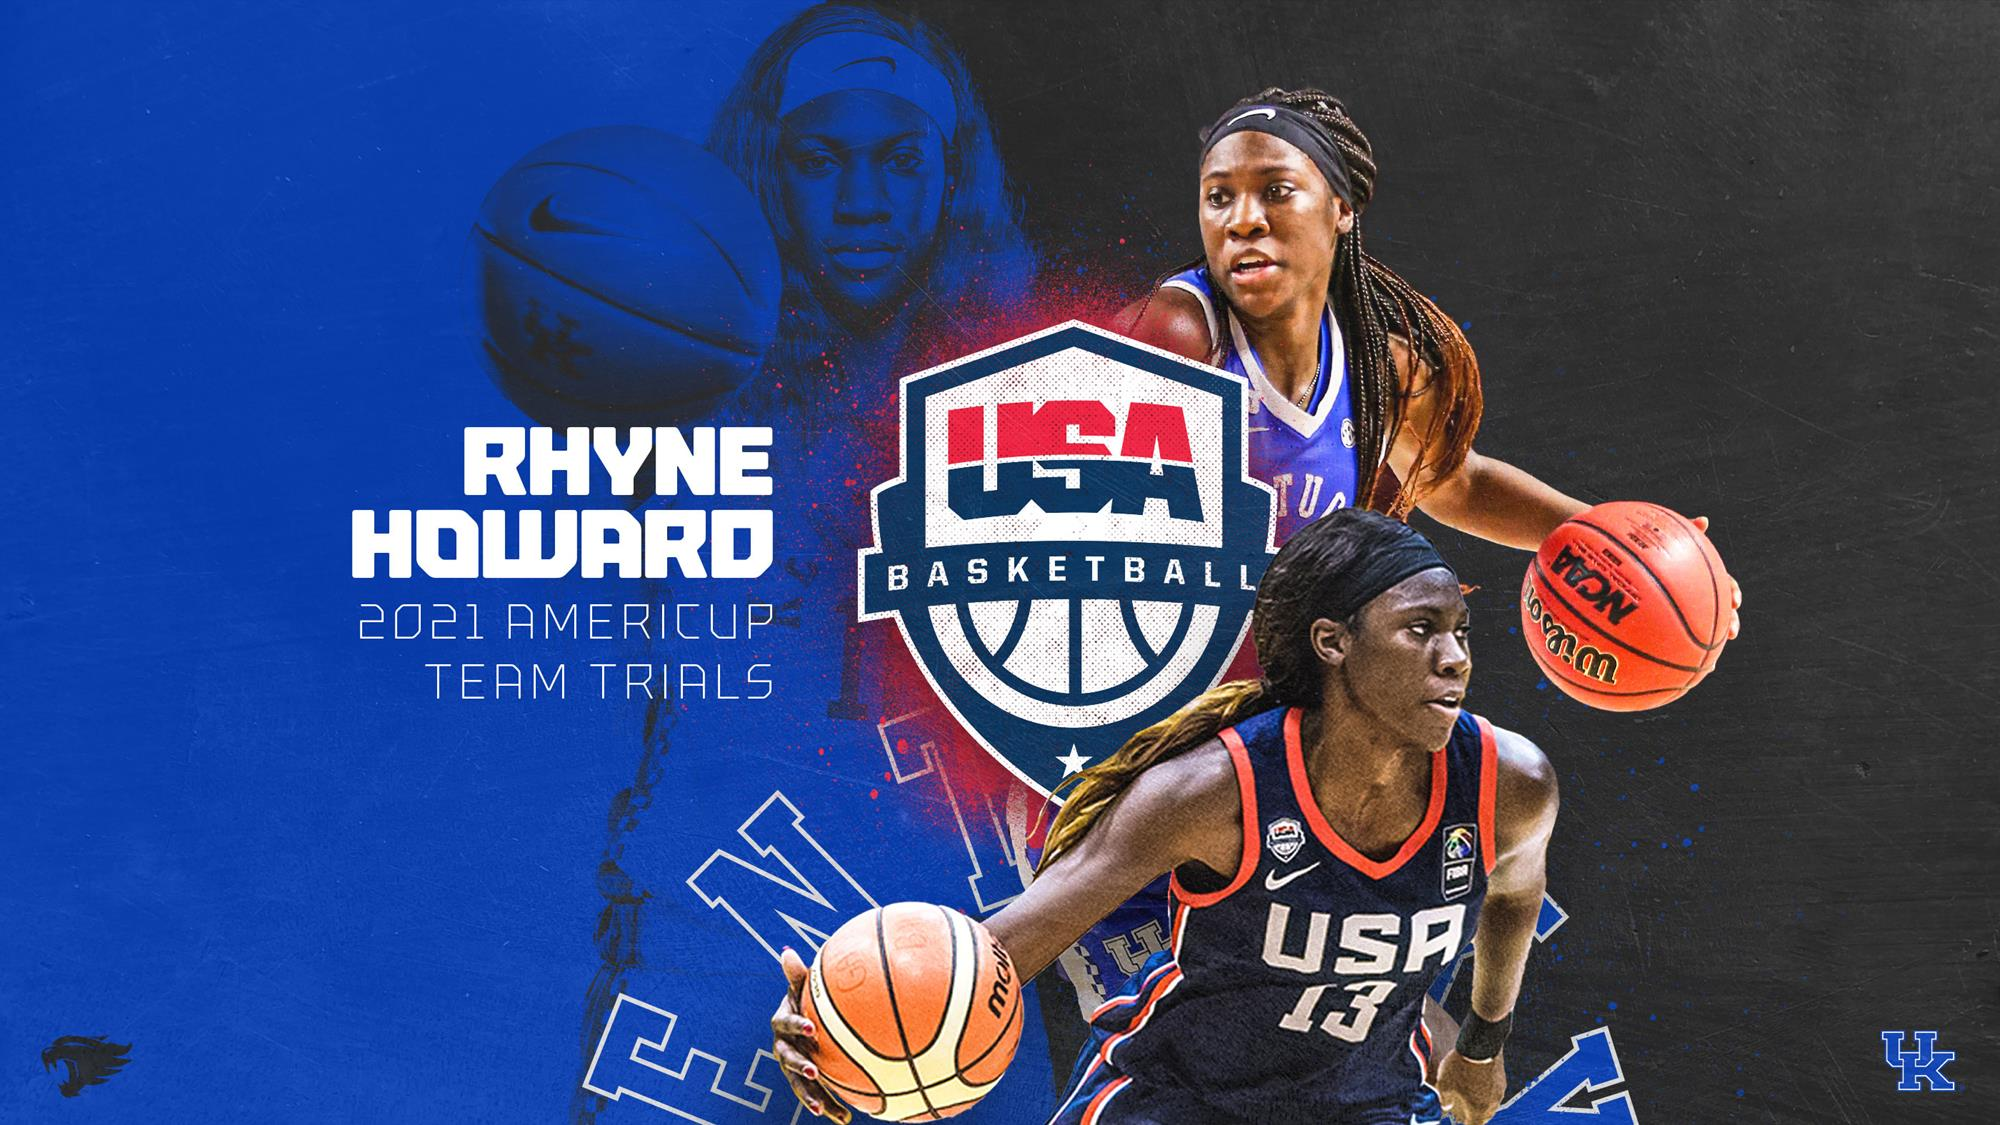 Rhyne Howard Invited to USA Basketball AmeriCup Team Trials